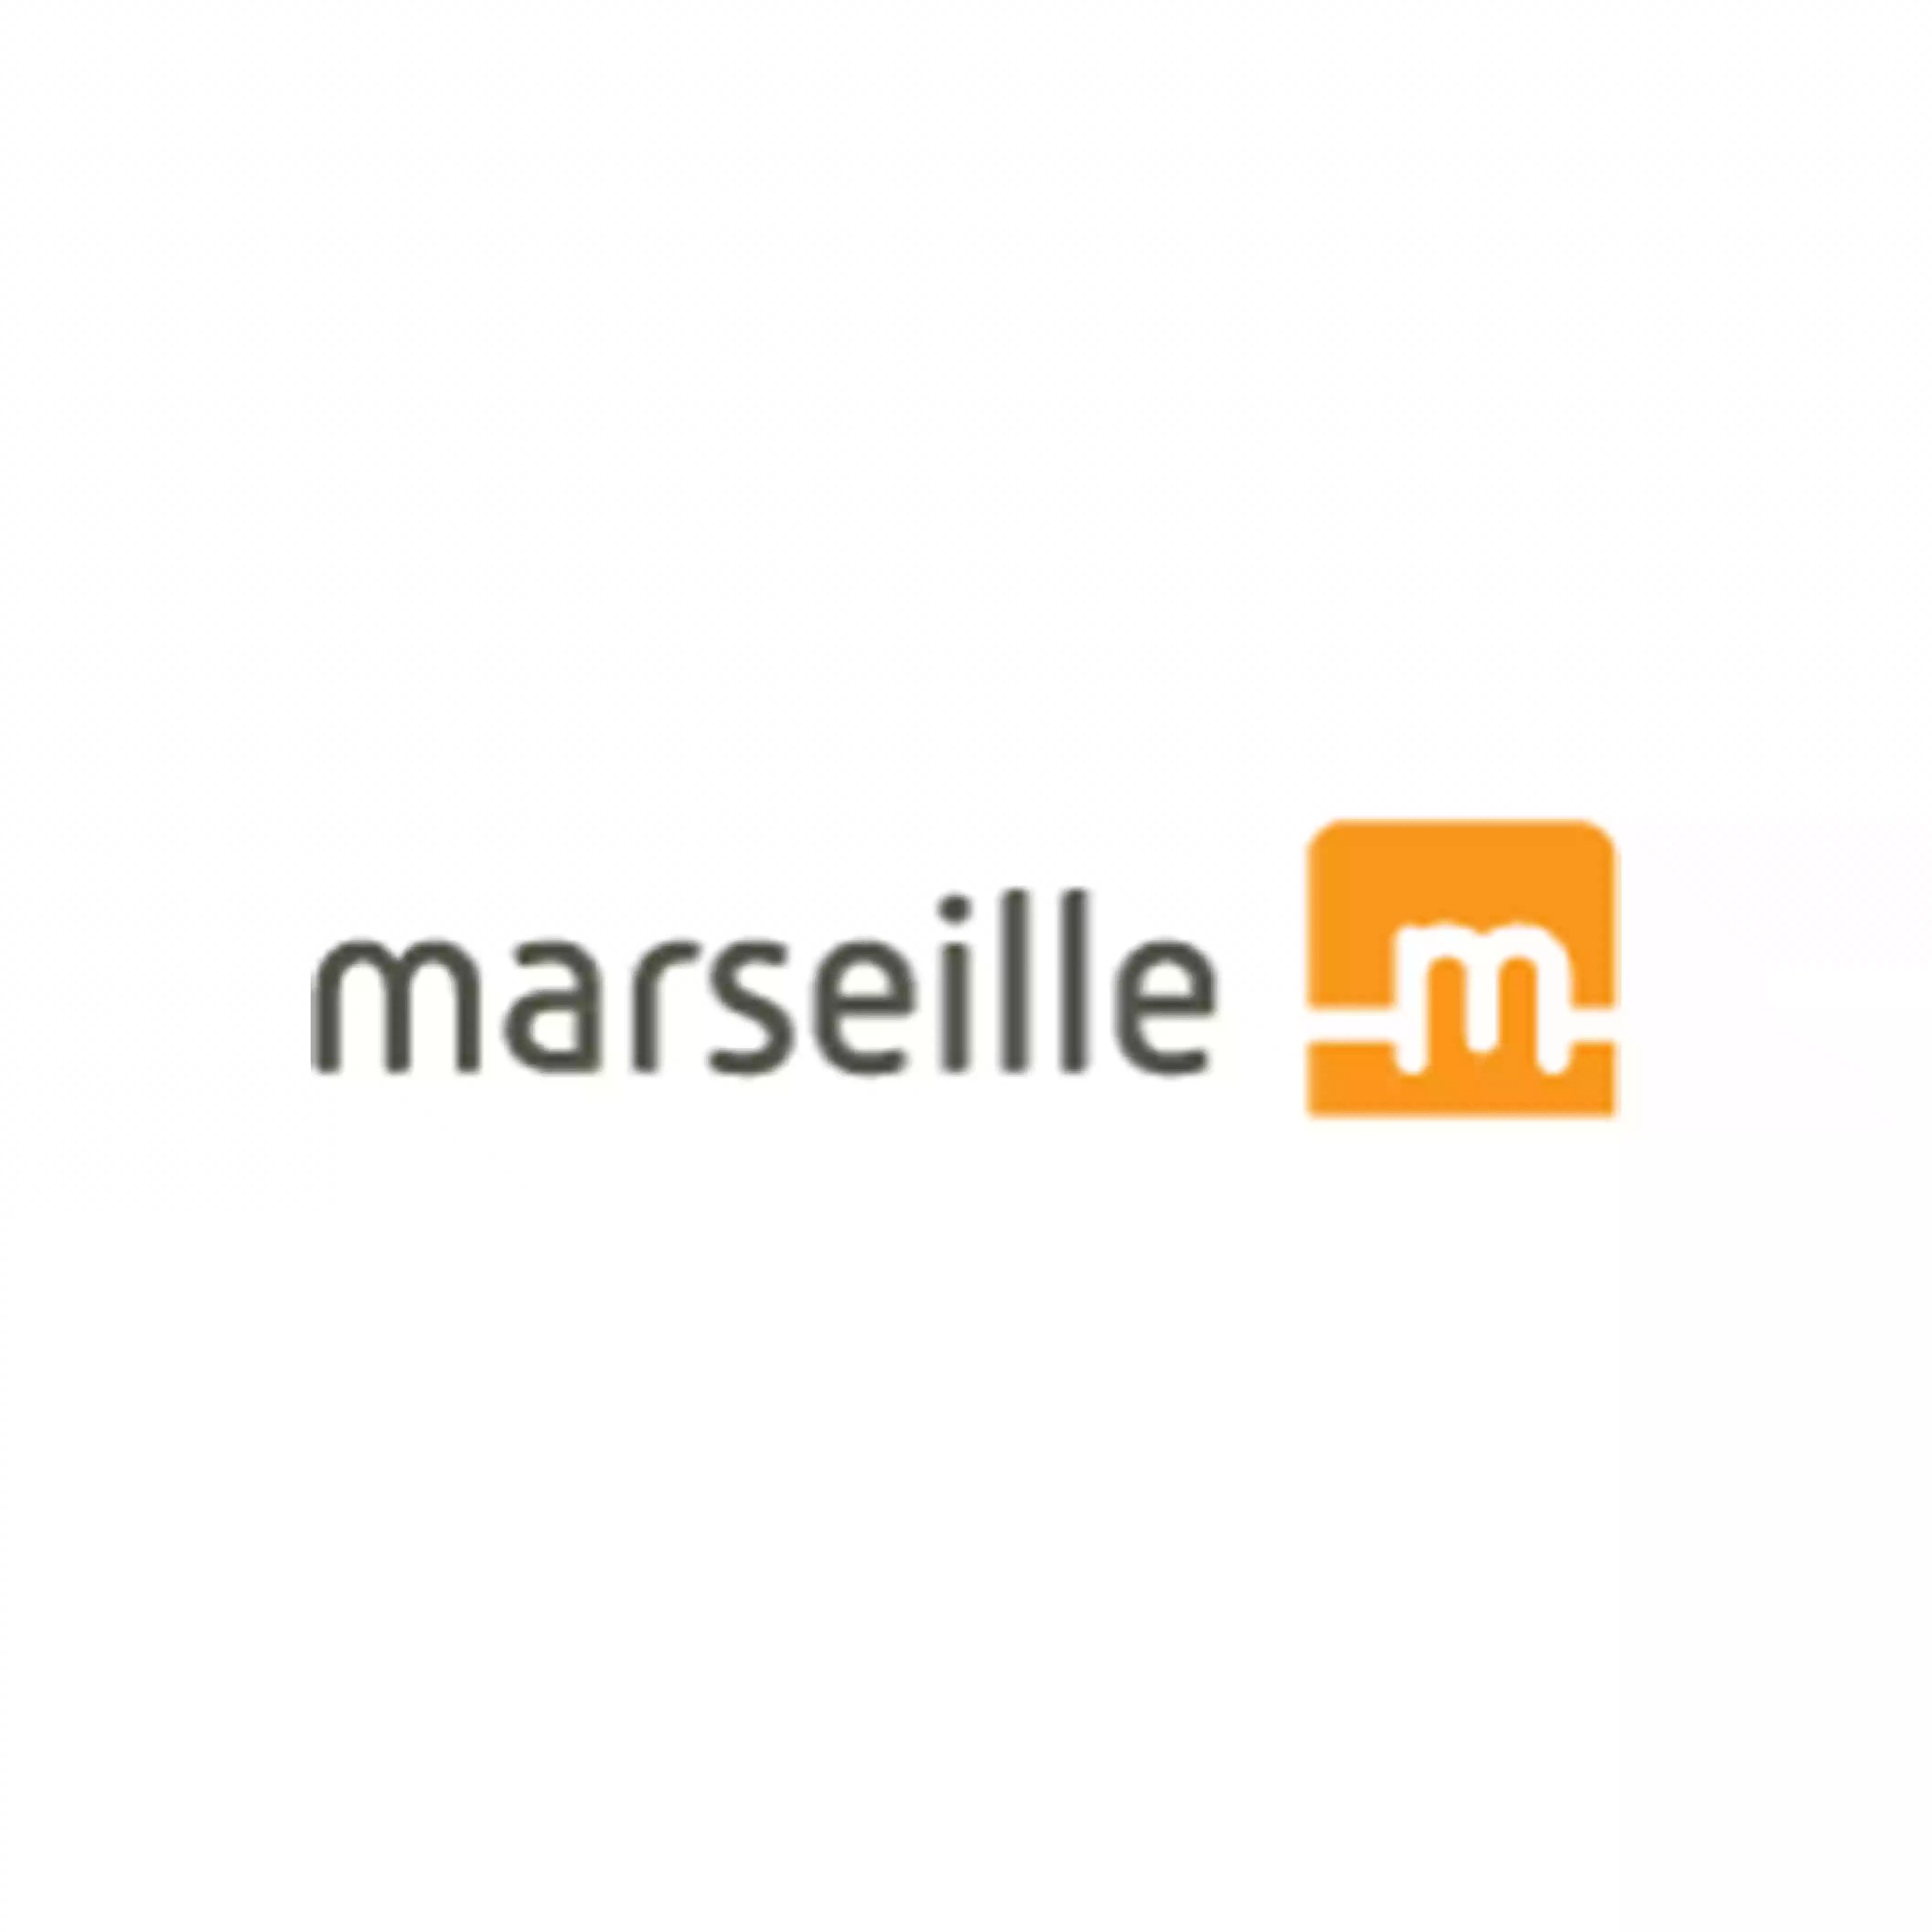 Marseilleinc logo